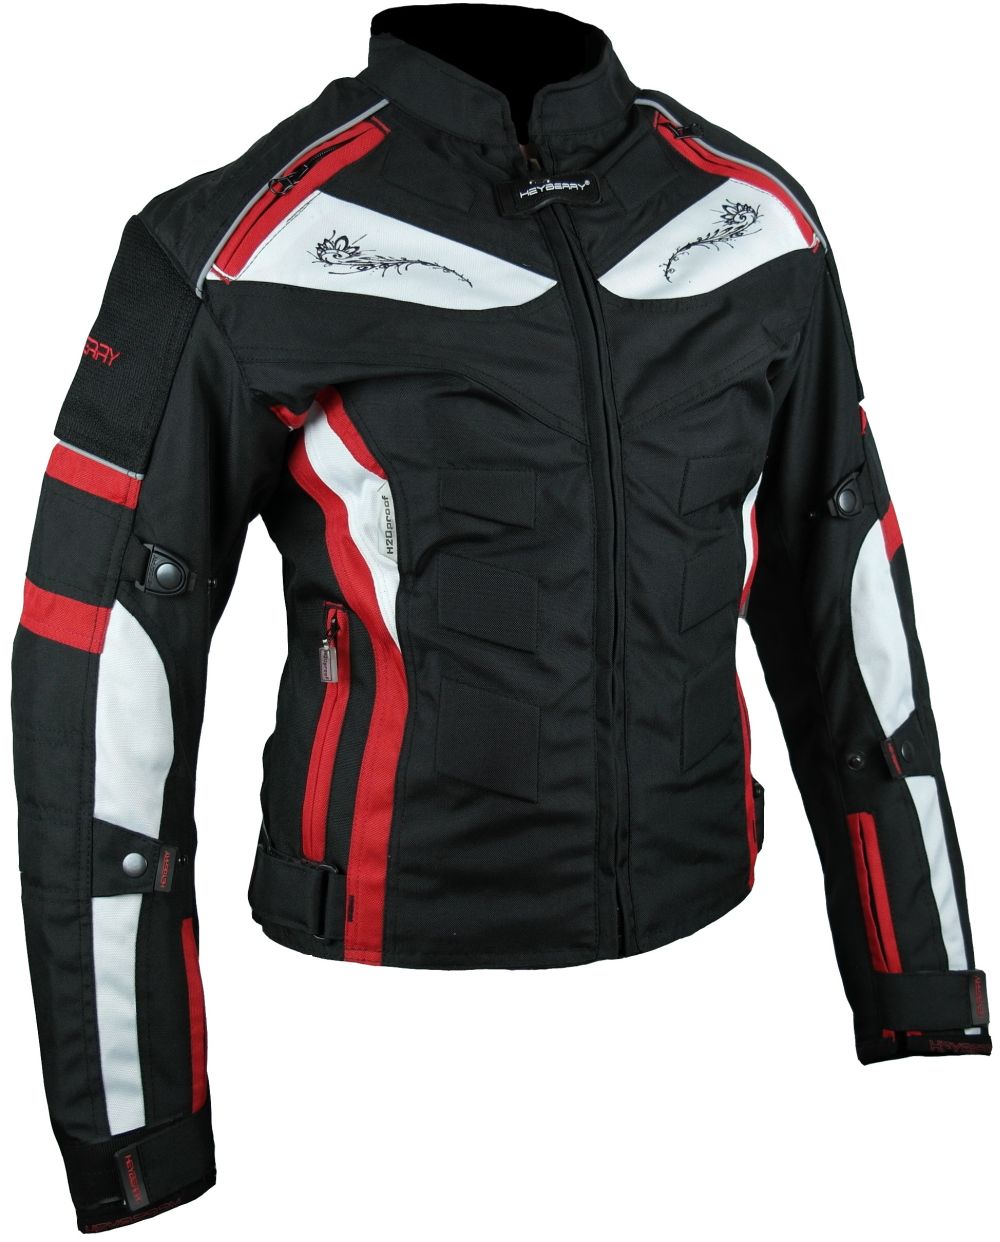 Heyberry Damen Soft Shell Jacke Motorradjacke Textil Rot Gr S M L XL 